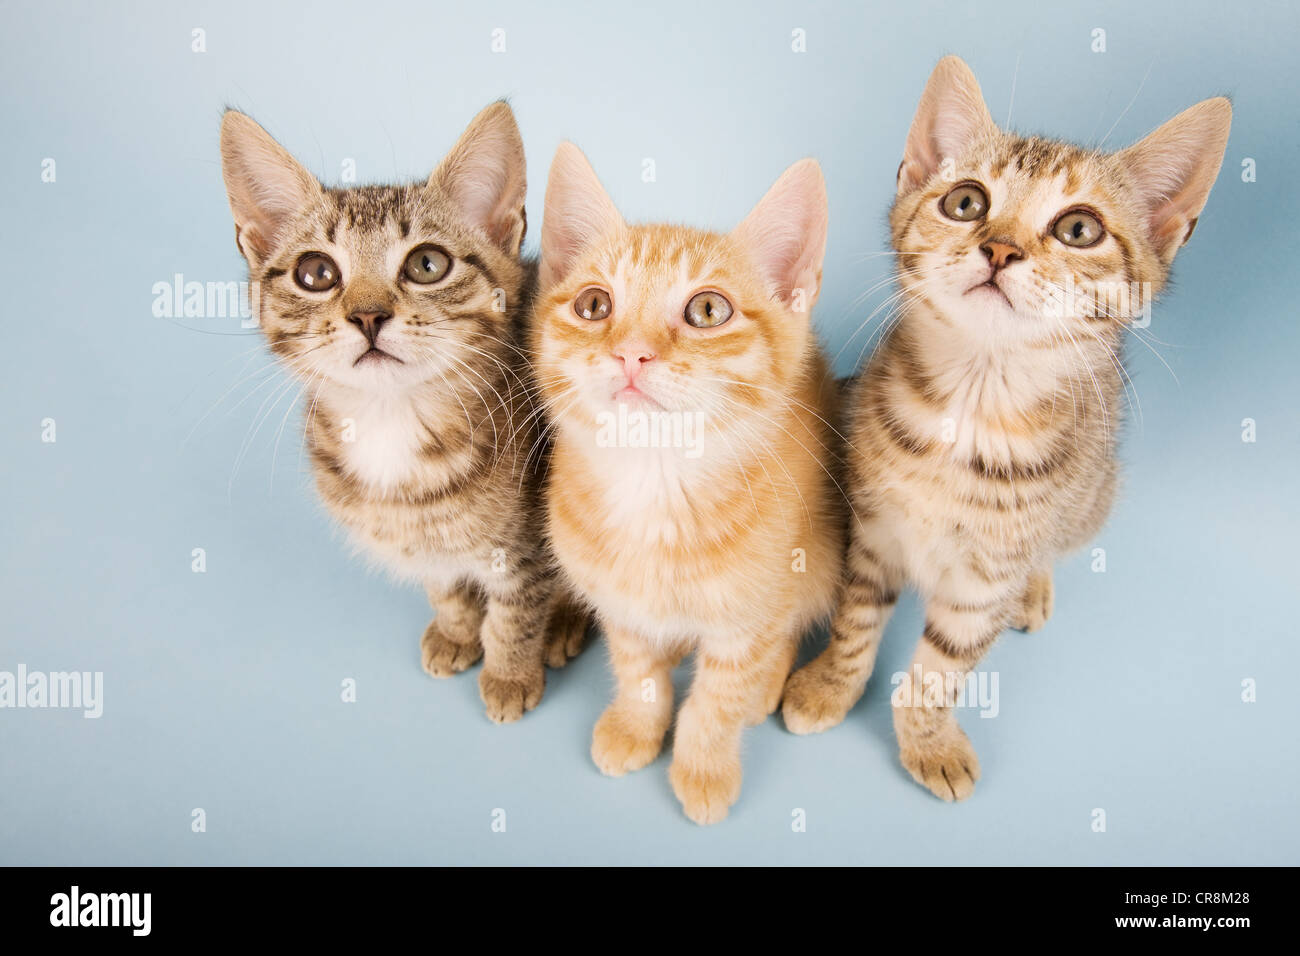 Three cats looking up Stock Photo